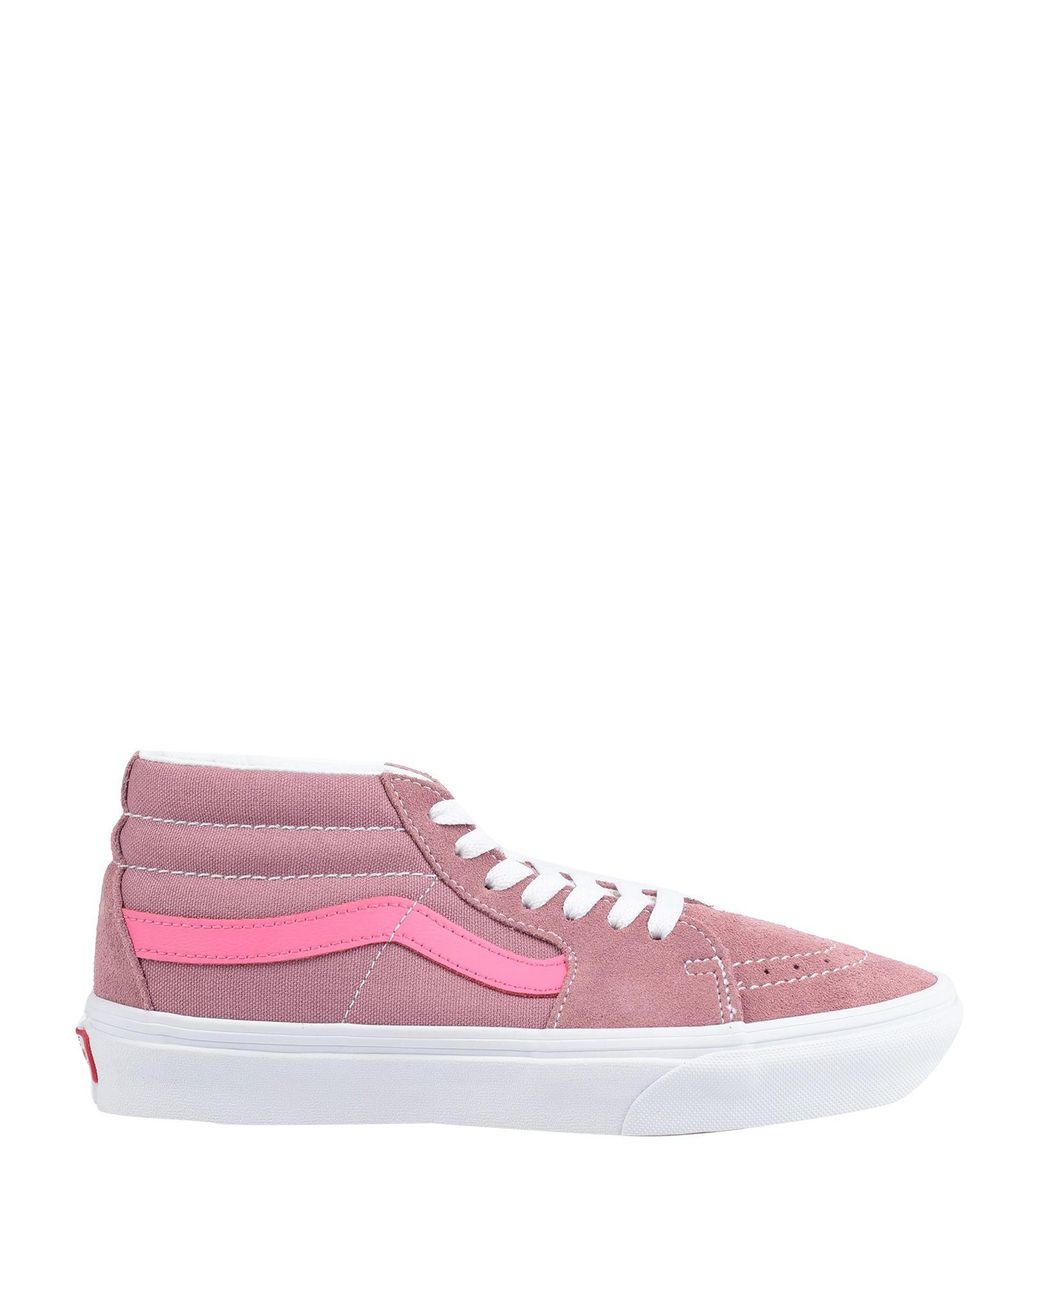 Vans Canvas High-tops & Sneakers in Pastel Pink (Pink) - Lyst